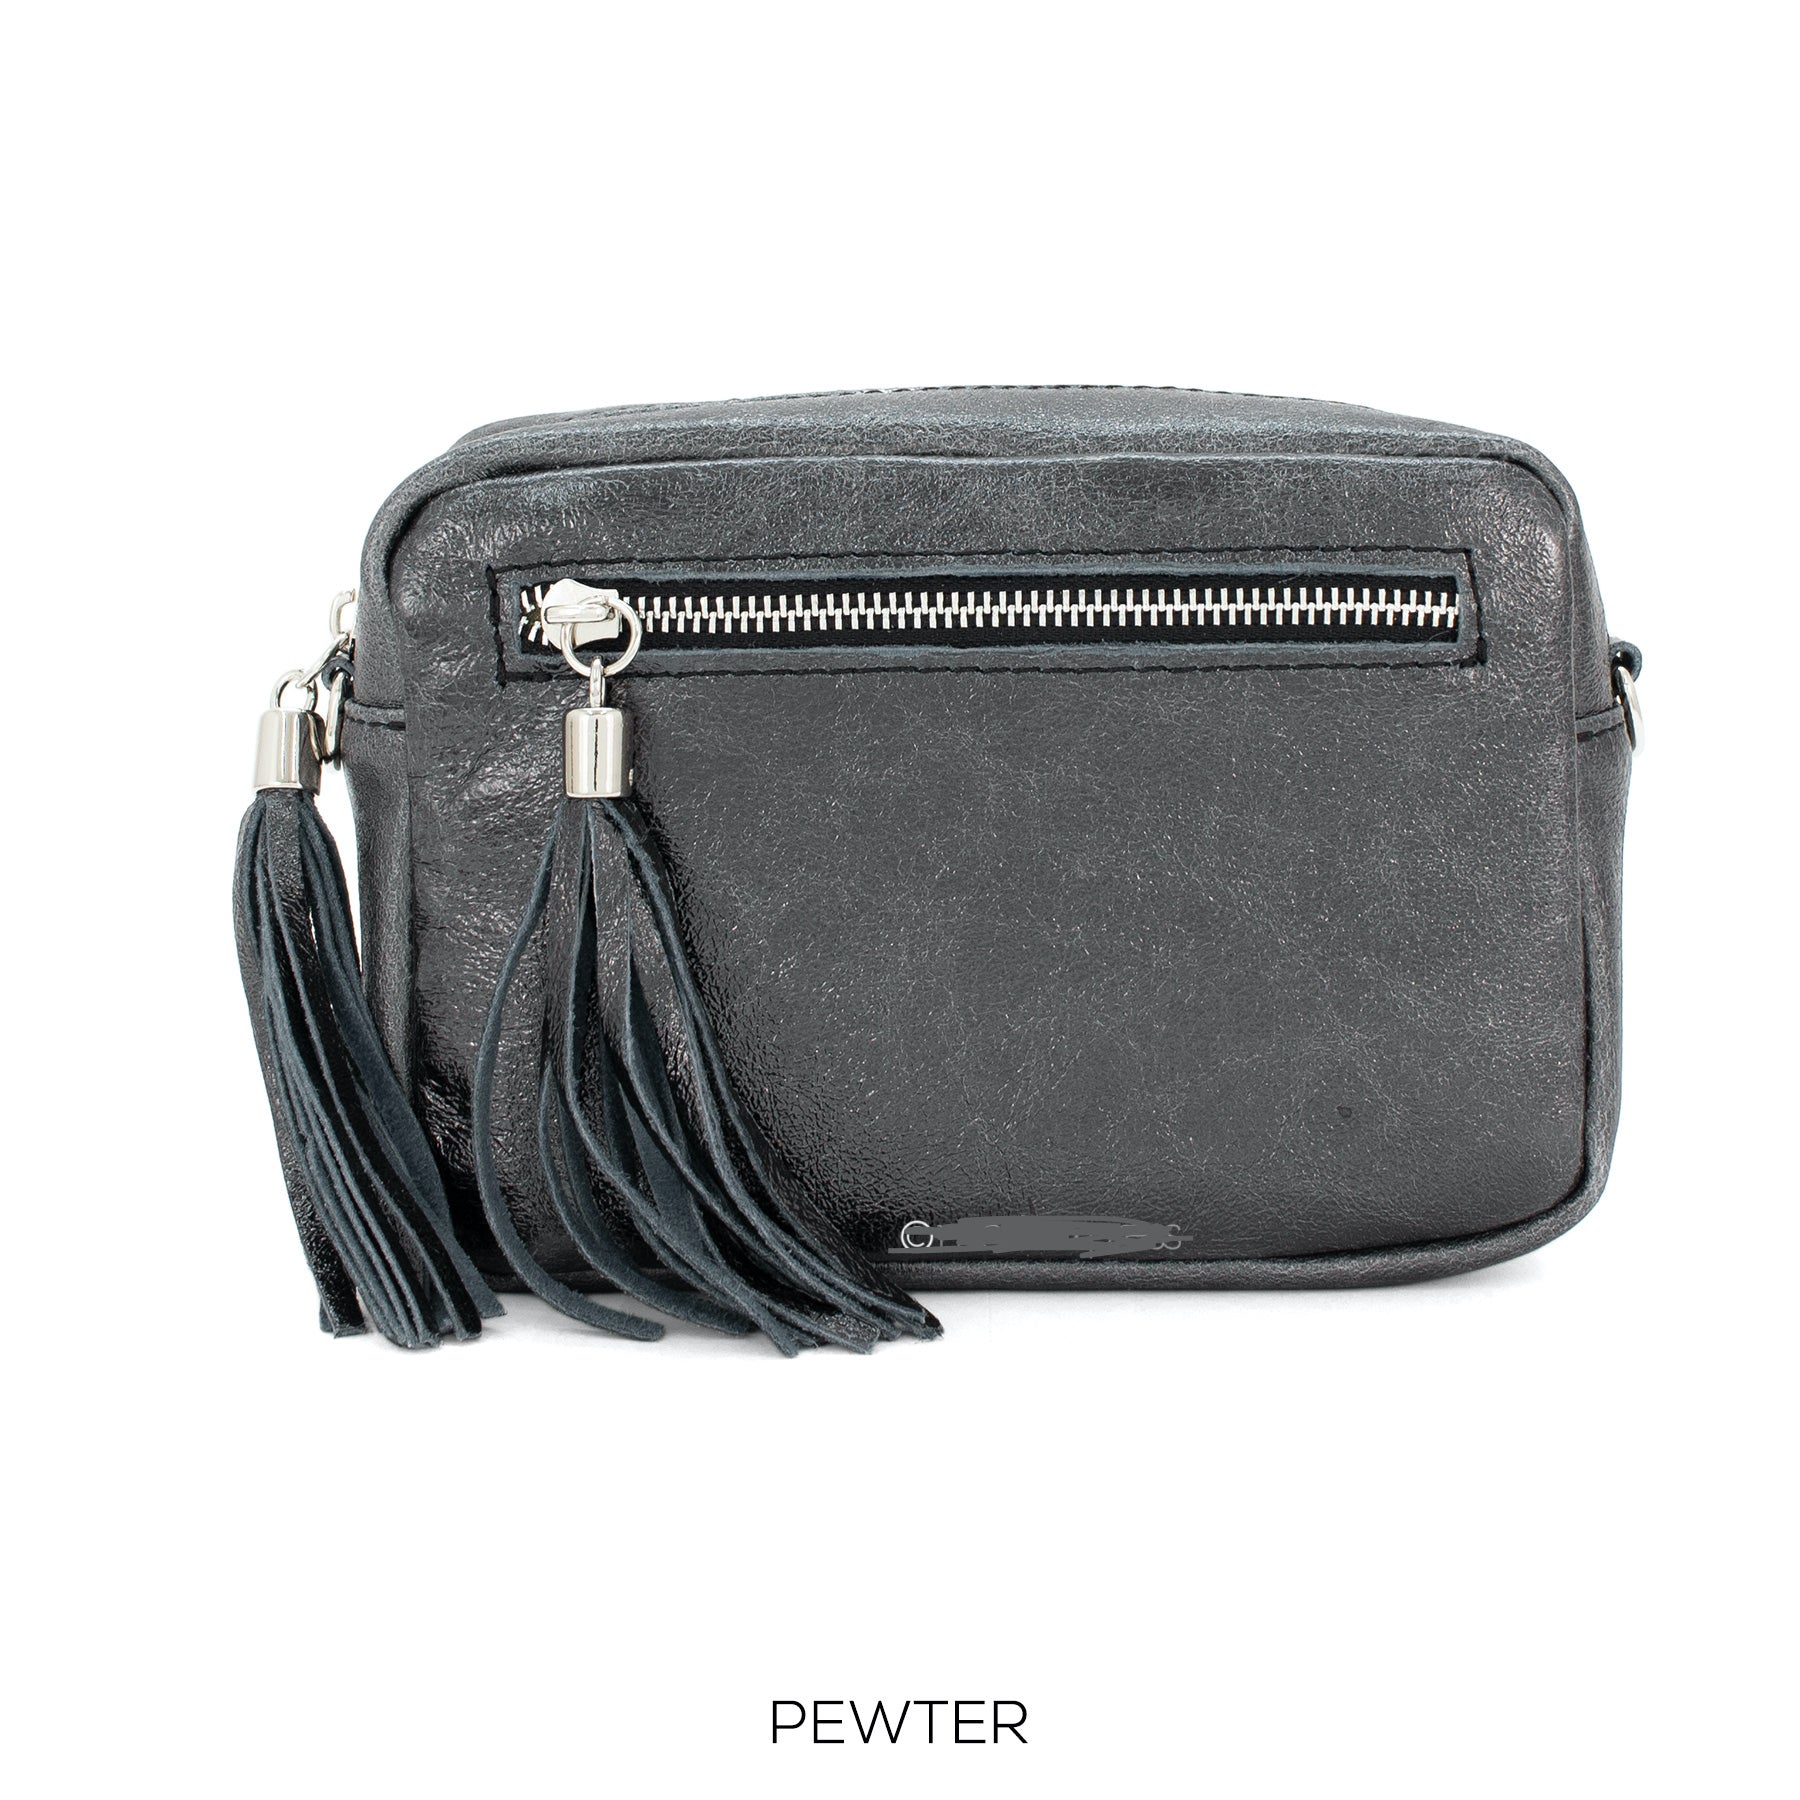 Leather Metallic Crossbody Bag With Detachable Strap